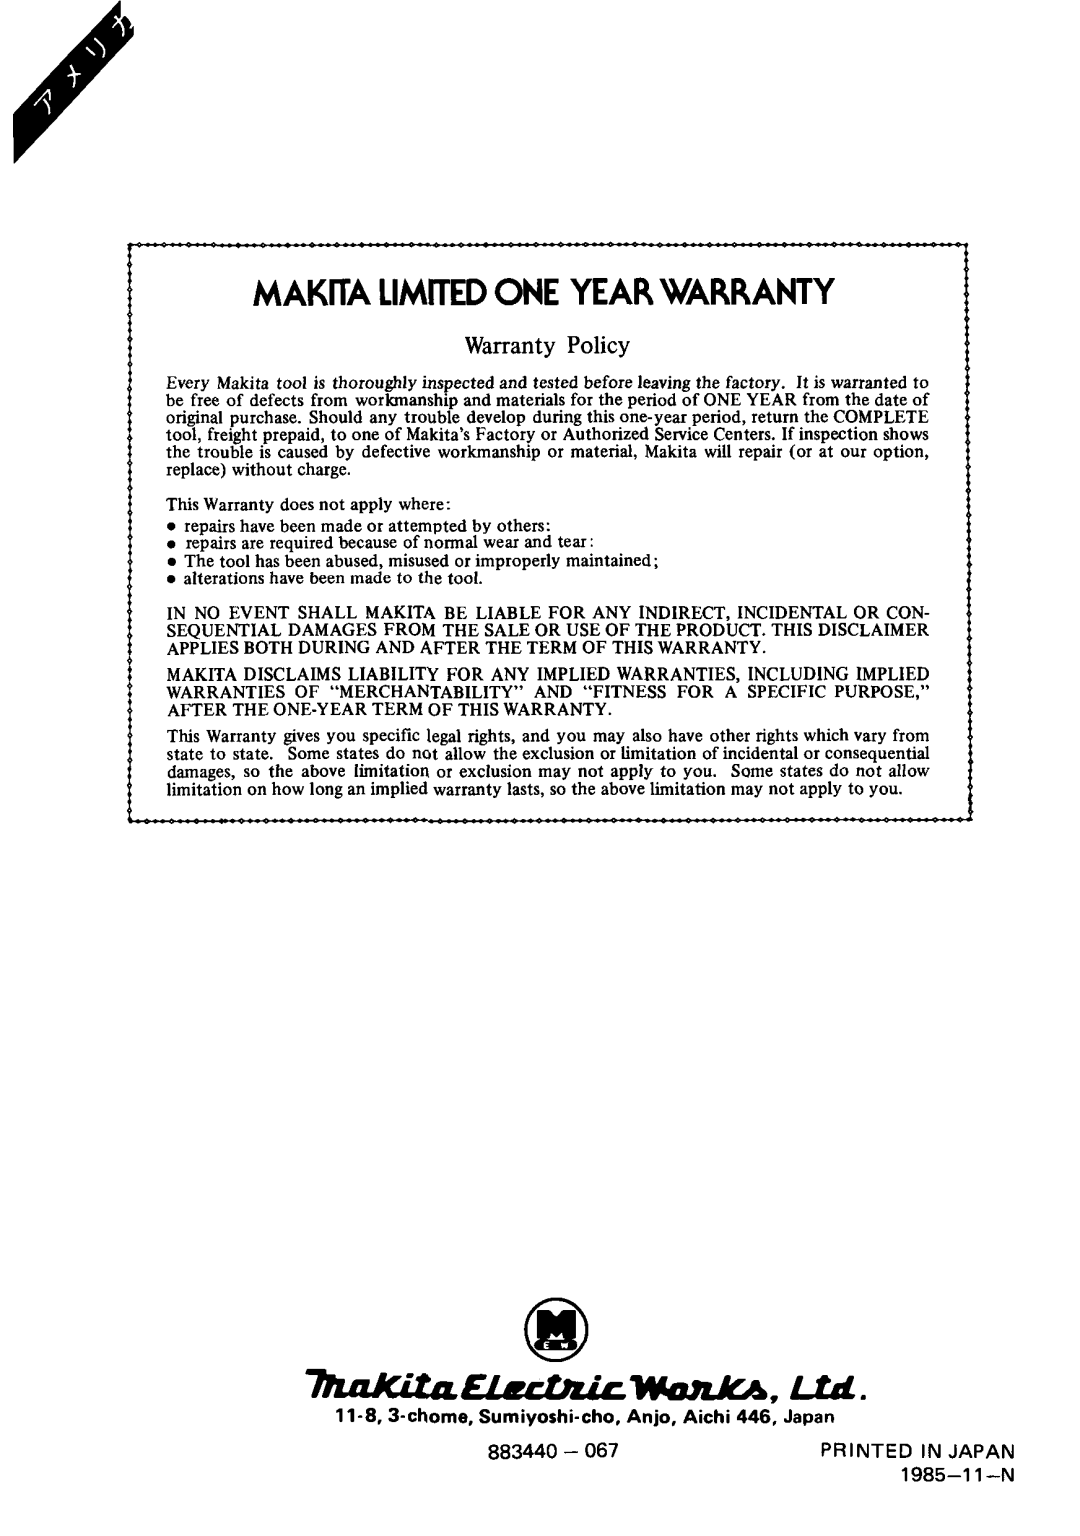 Makita 4014NV Makita Limitedone Year Warranty, ~~-.u, Warranty Policy, 11-8,J-chome, Sumiyoshi-cho. Anjo, Aichi 446, Japan 